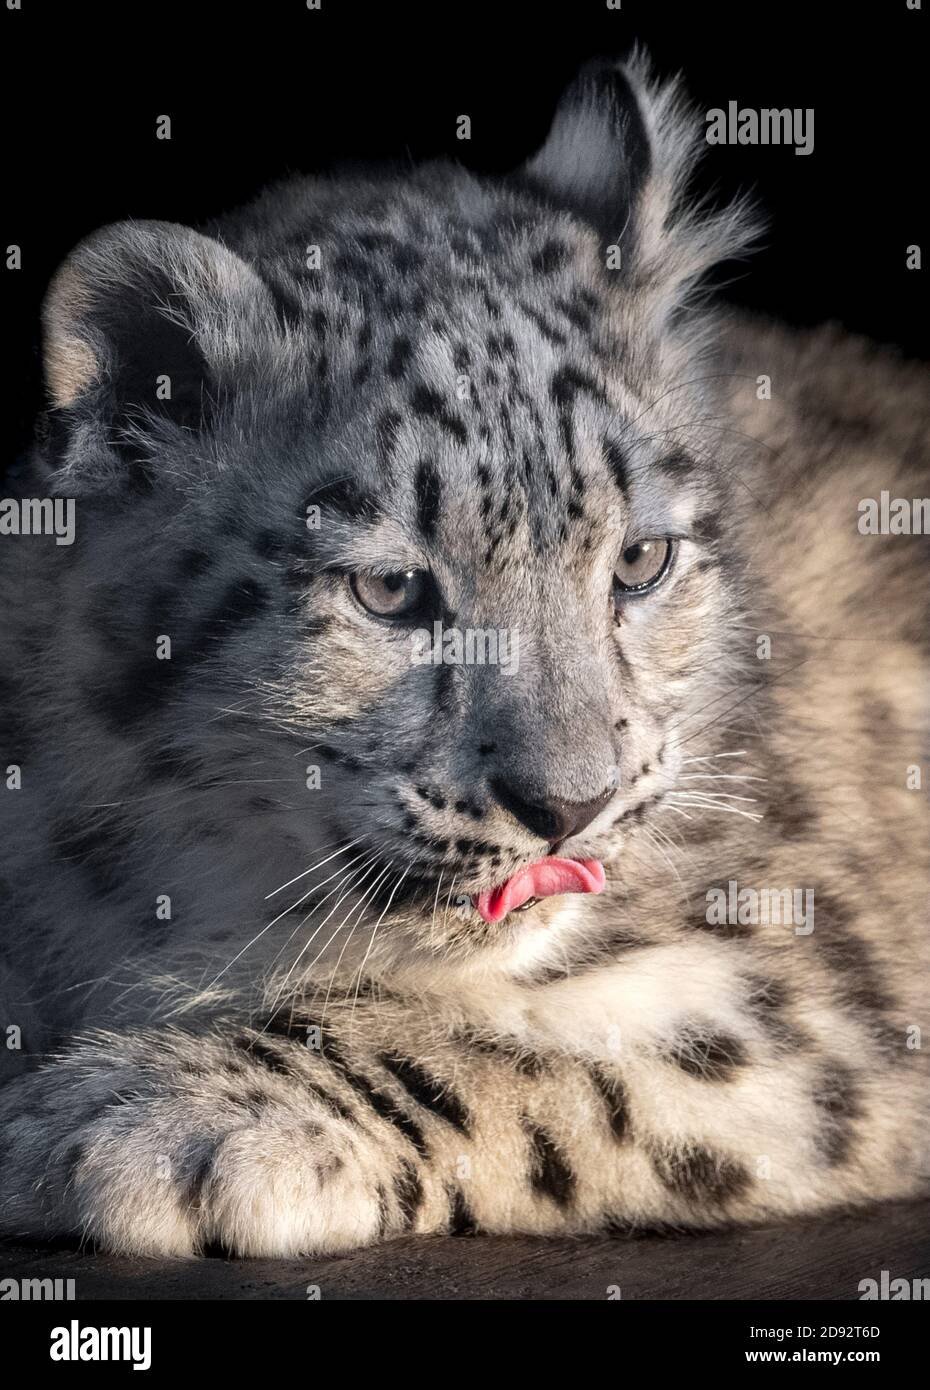 Snow leopard cub licking lips Stock Photo